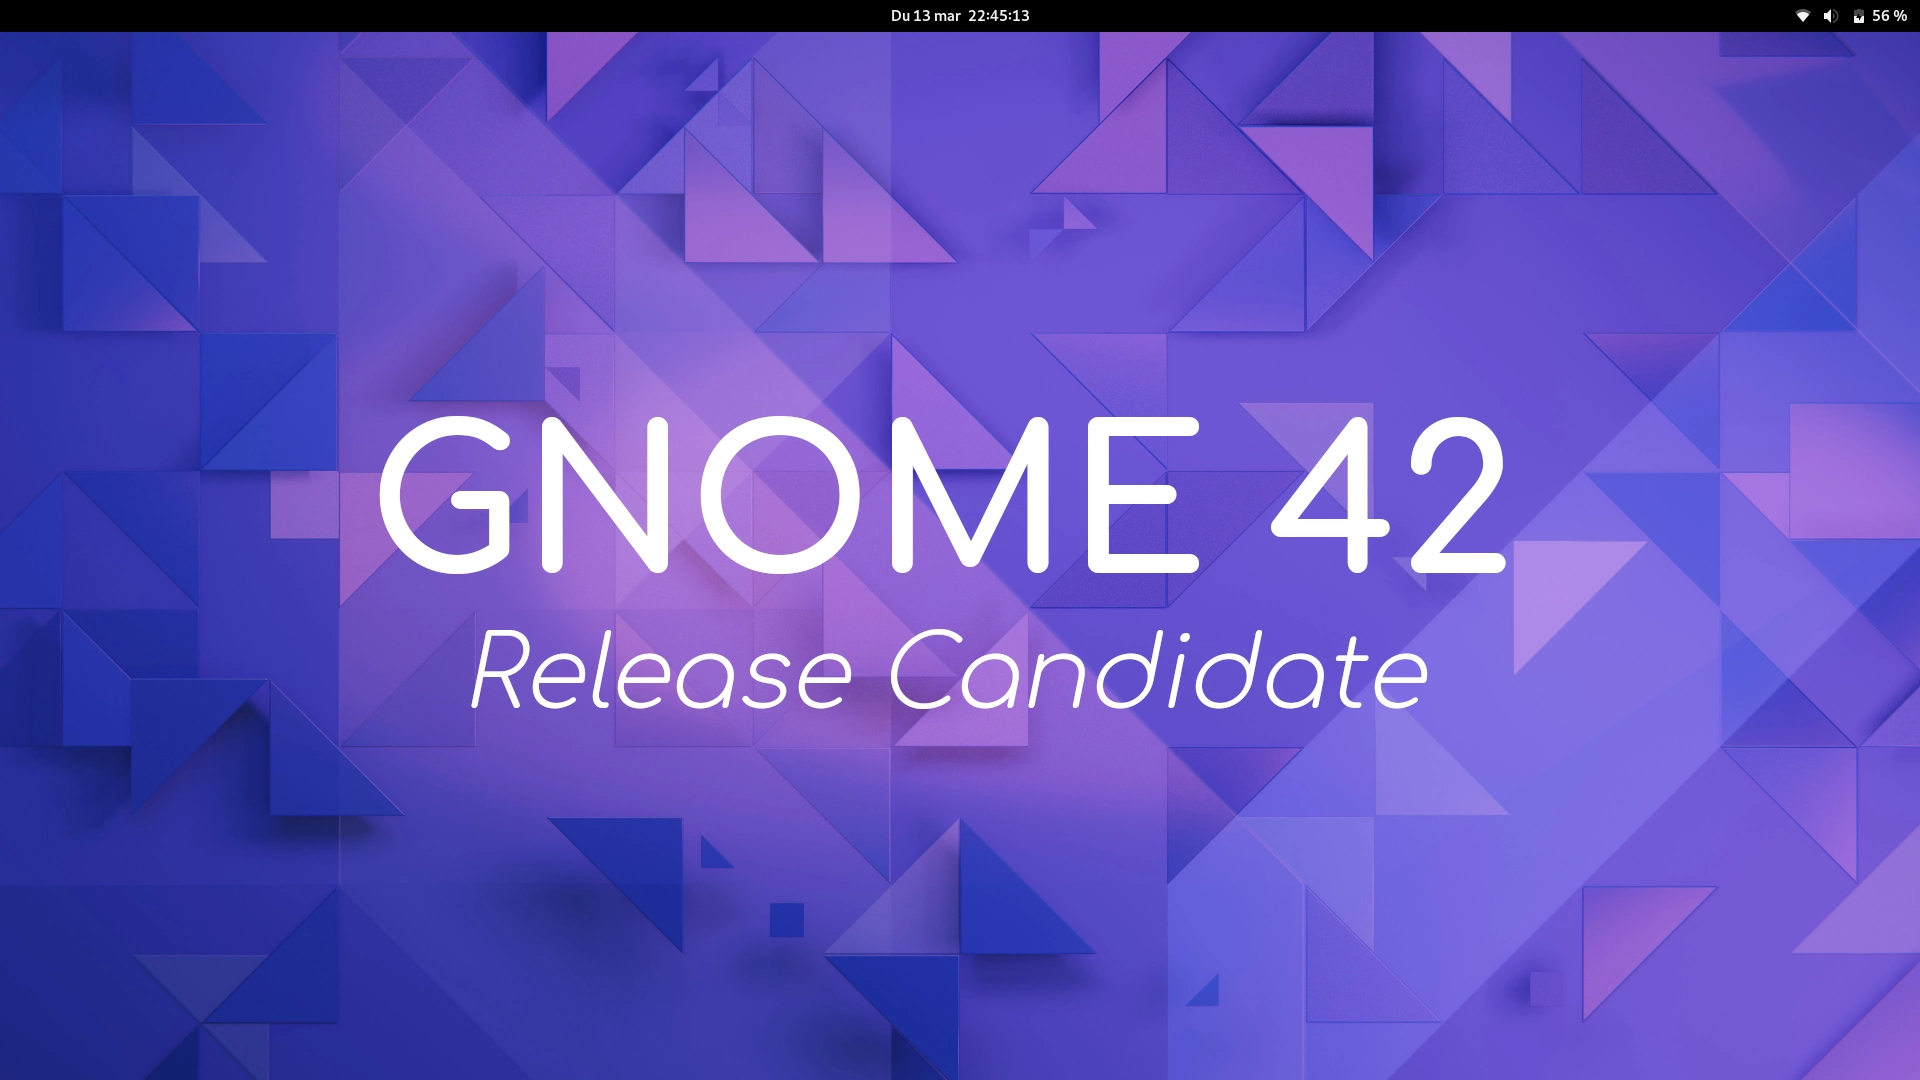 GNOME 42 Release Candidate Brings Back Fingerprint Dialog in Control Center